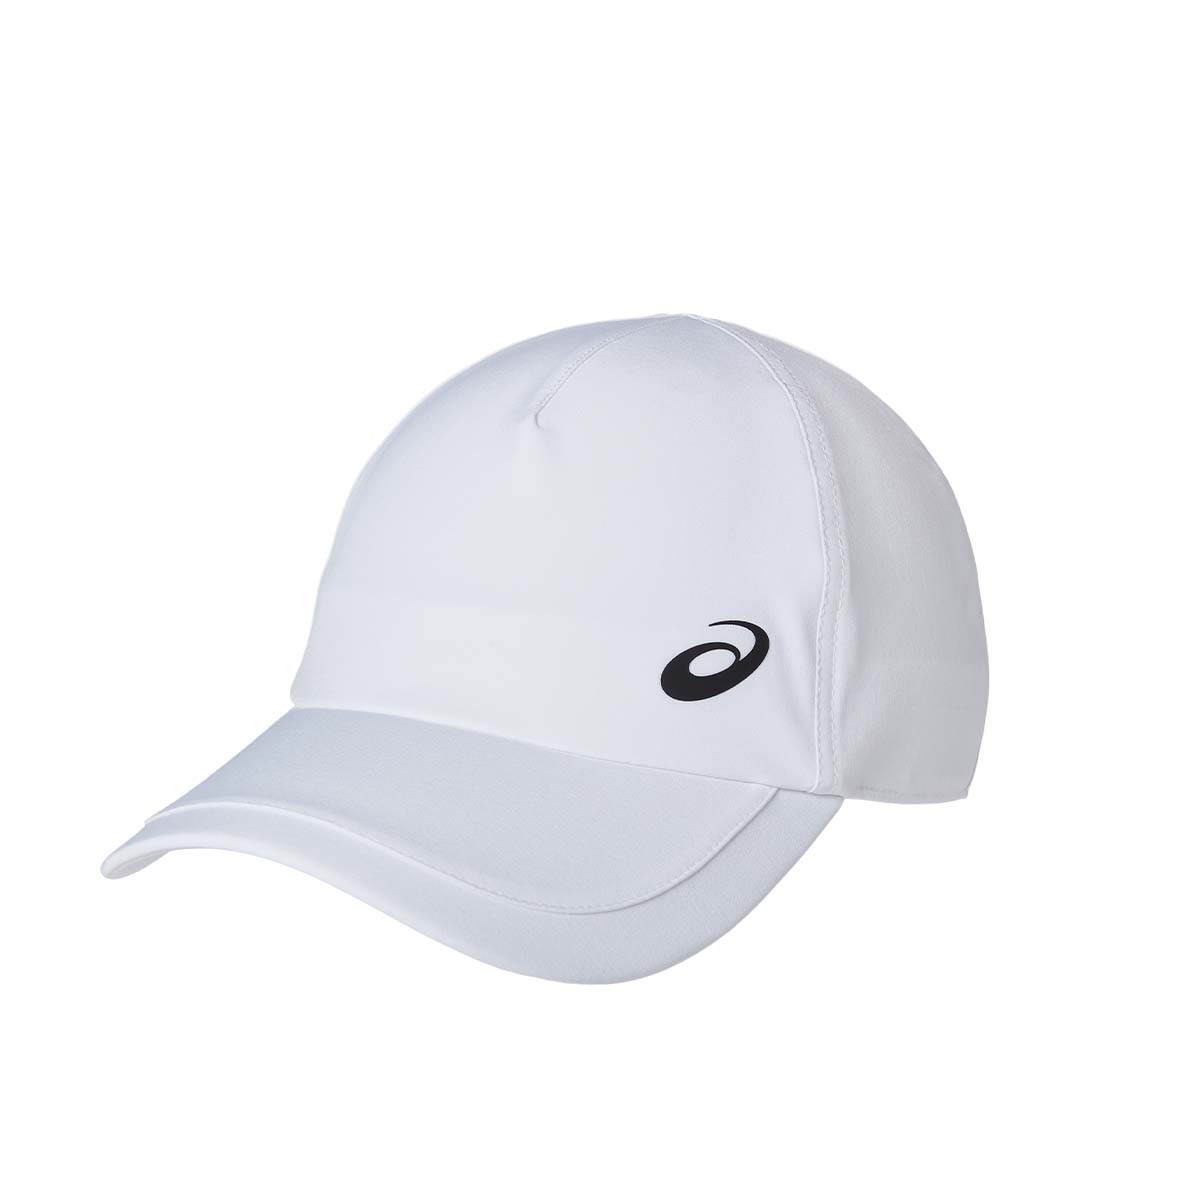 Asics PF Cap White כובע אסיקס